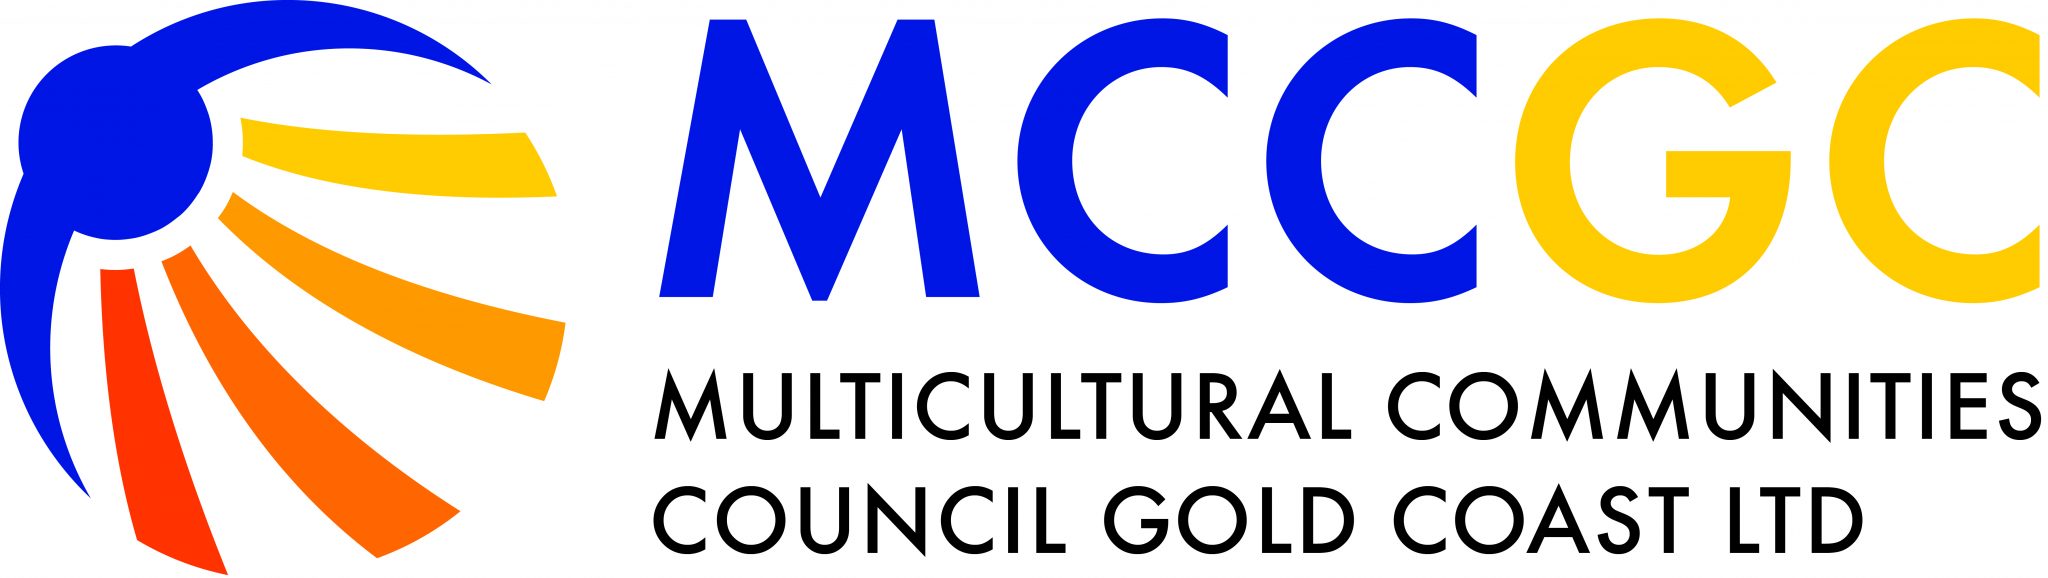 MCCGC Logo.jpg